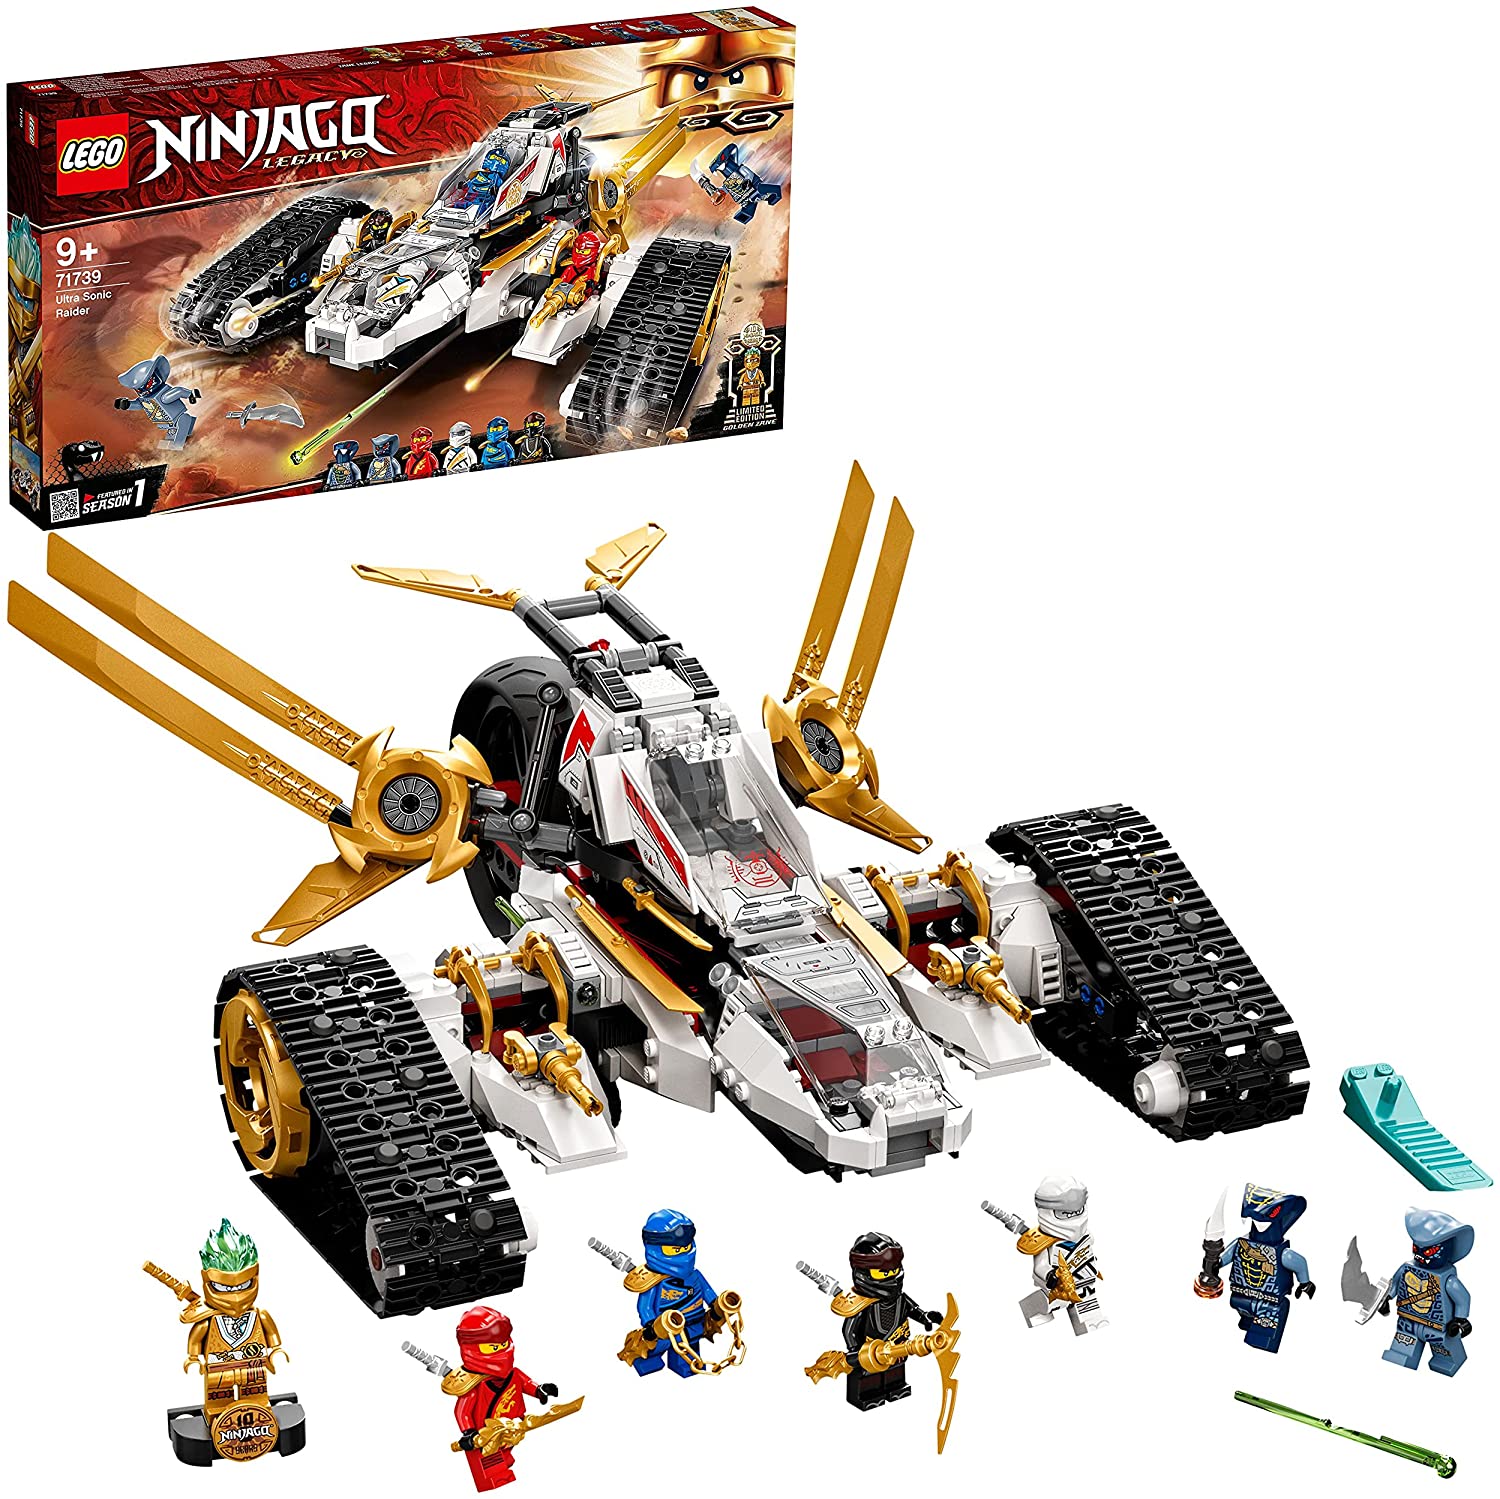 LEGO 71739 Ninjago Ultrasonic Raider Construction Toy Set for Boys and Girl